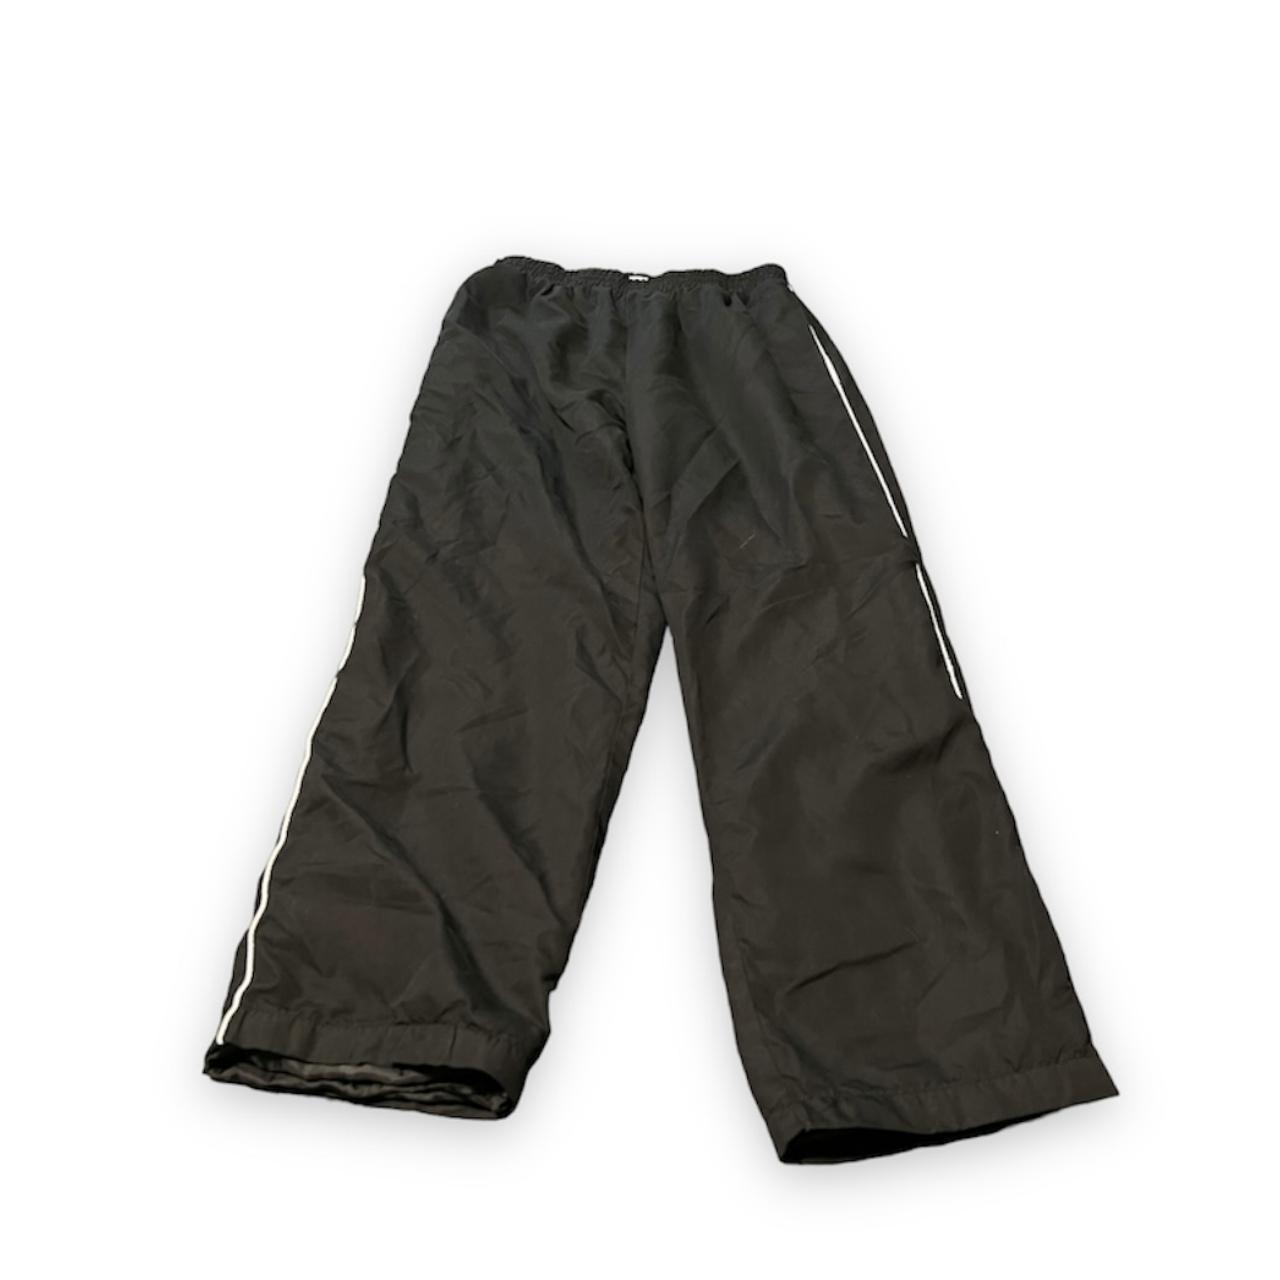 Danskin now warm up pants mesh pants size:L in good - Depop